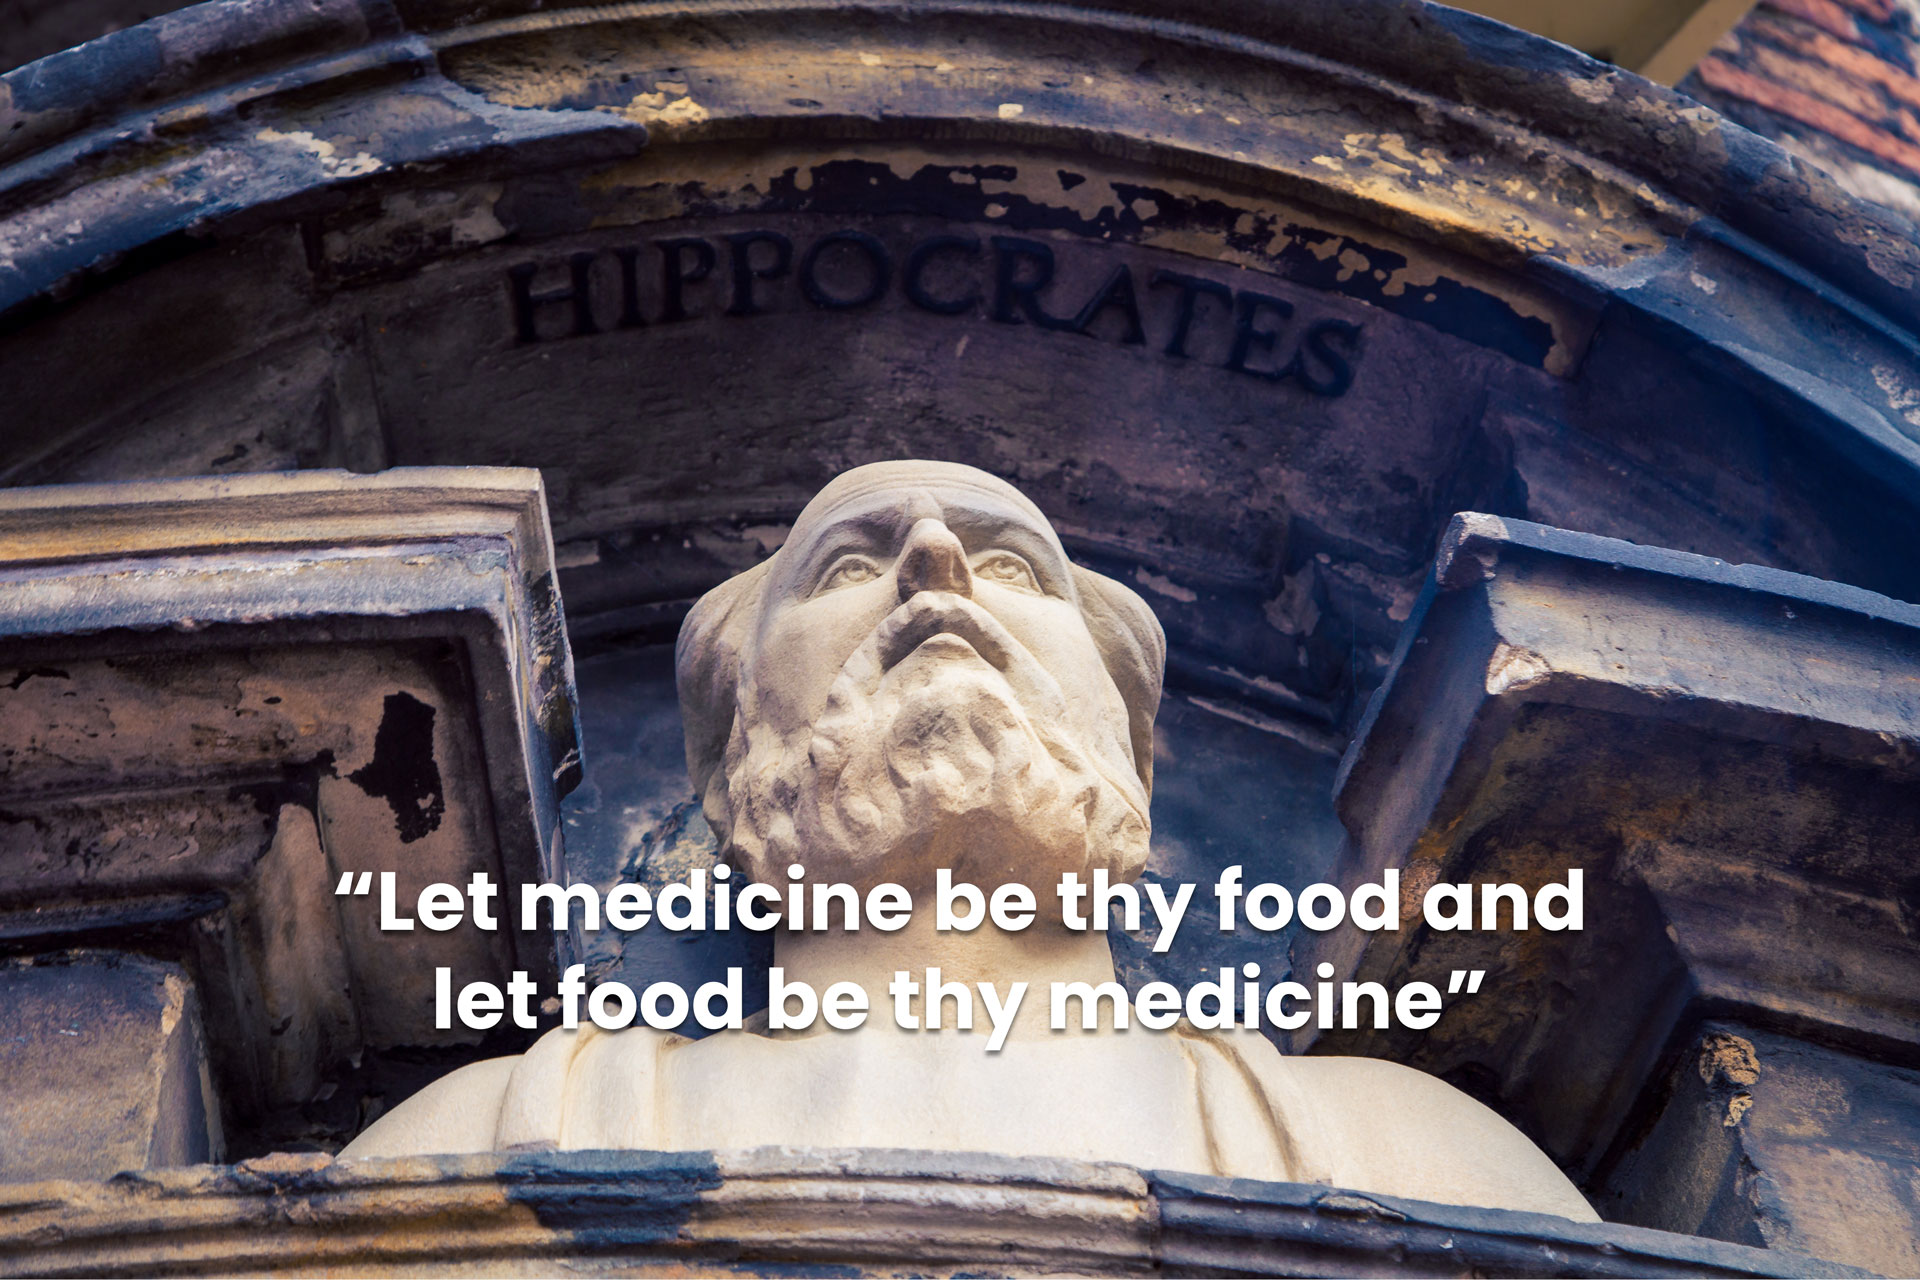 Food as Medicine